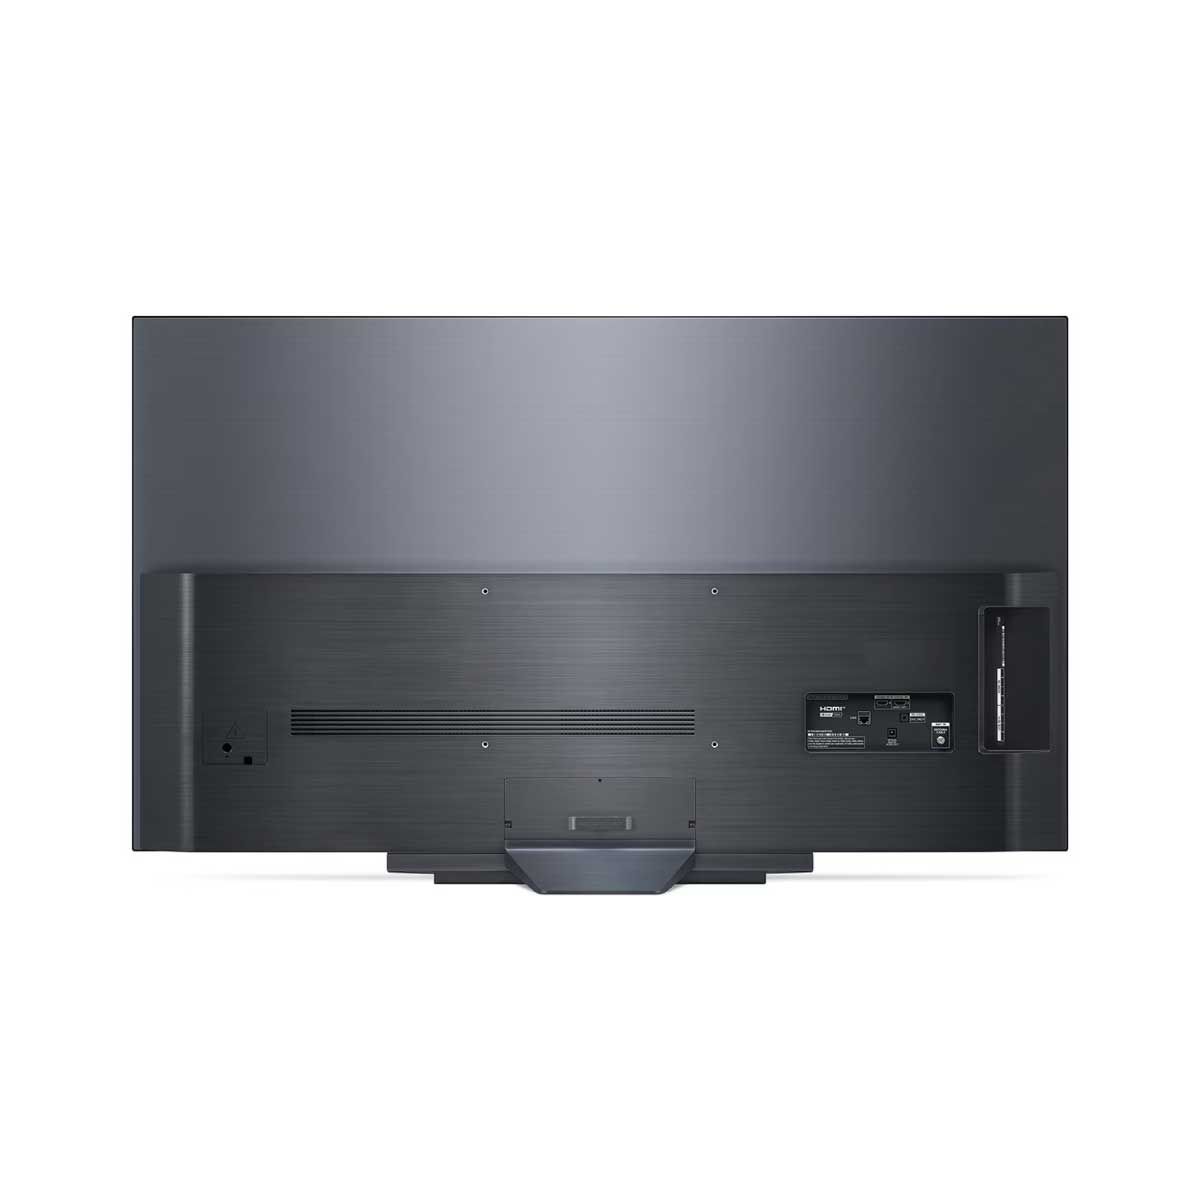 LG OLED 4K Smart TV 120Hz รุ่น OLED55B3PSA Self Lighting |Dolby Vision & Atmos | Refresh rate 120 Hz l ThinQ AI